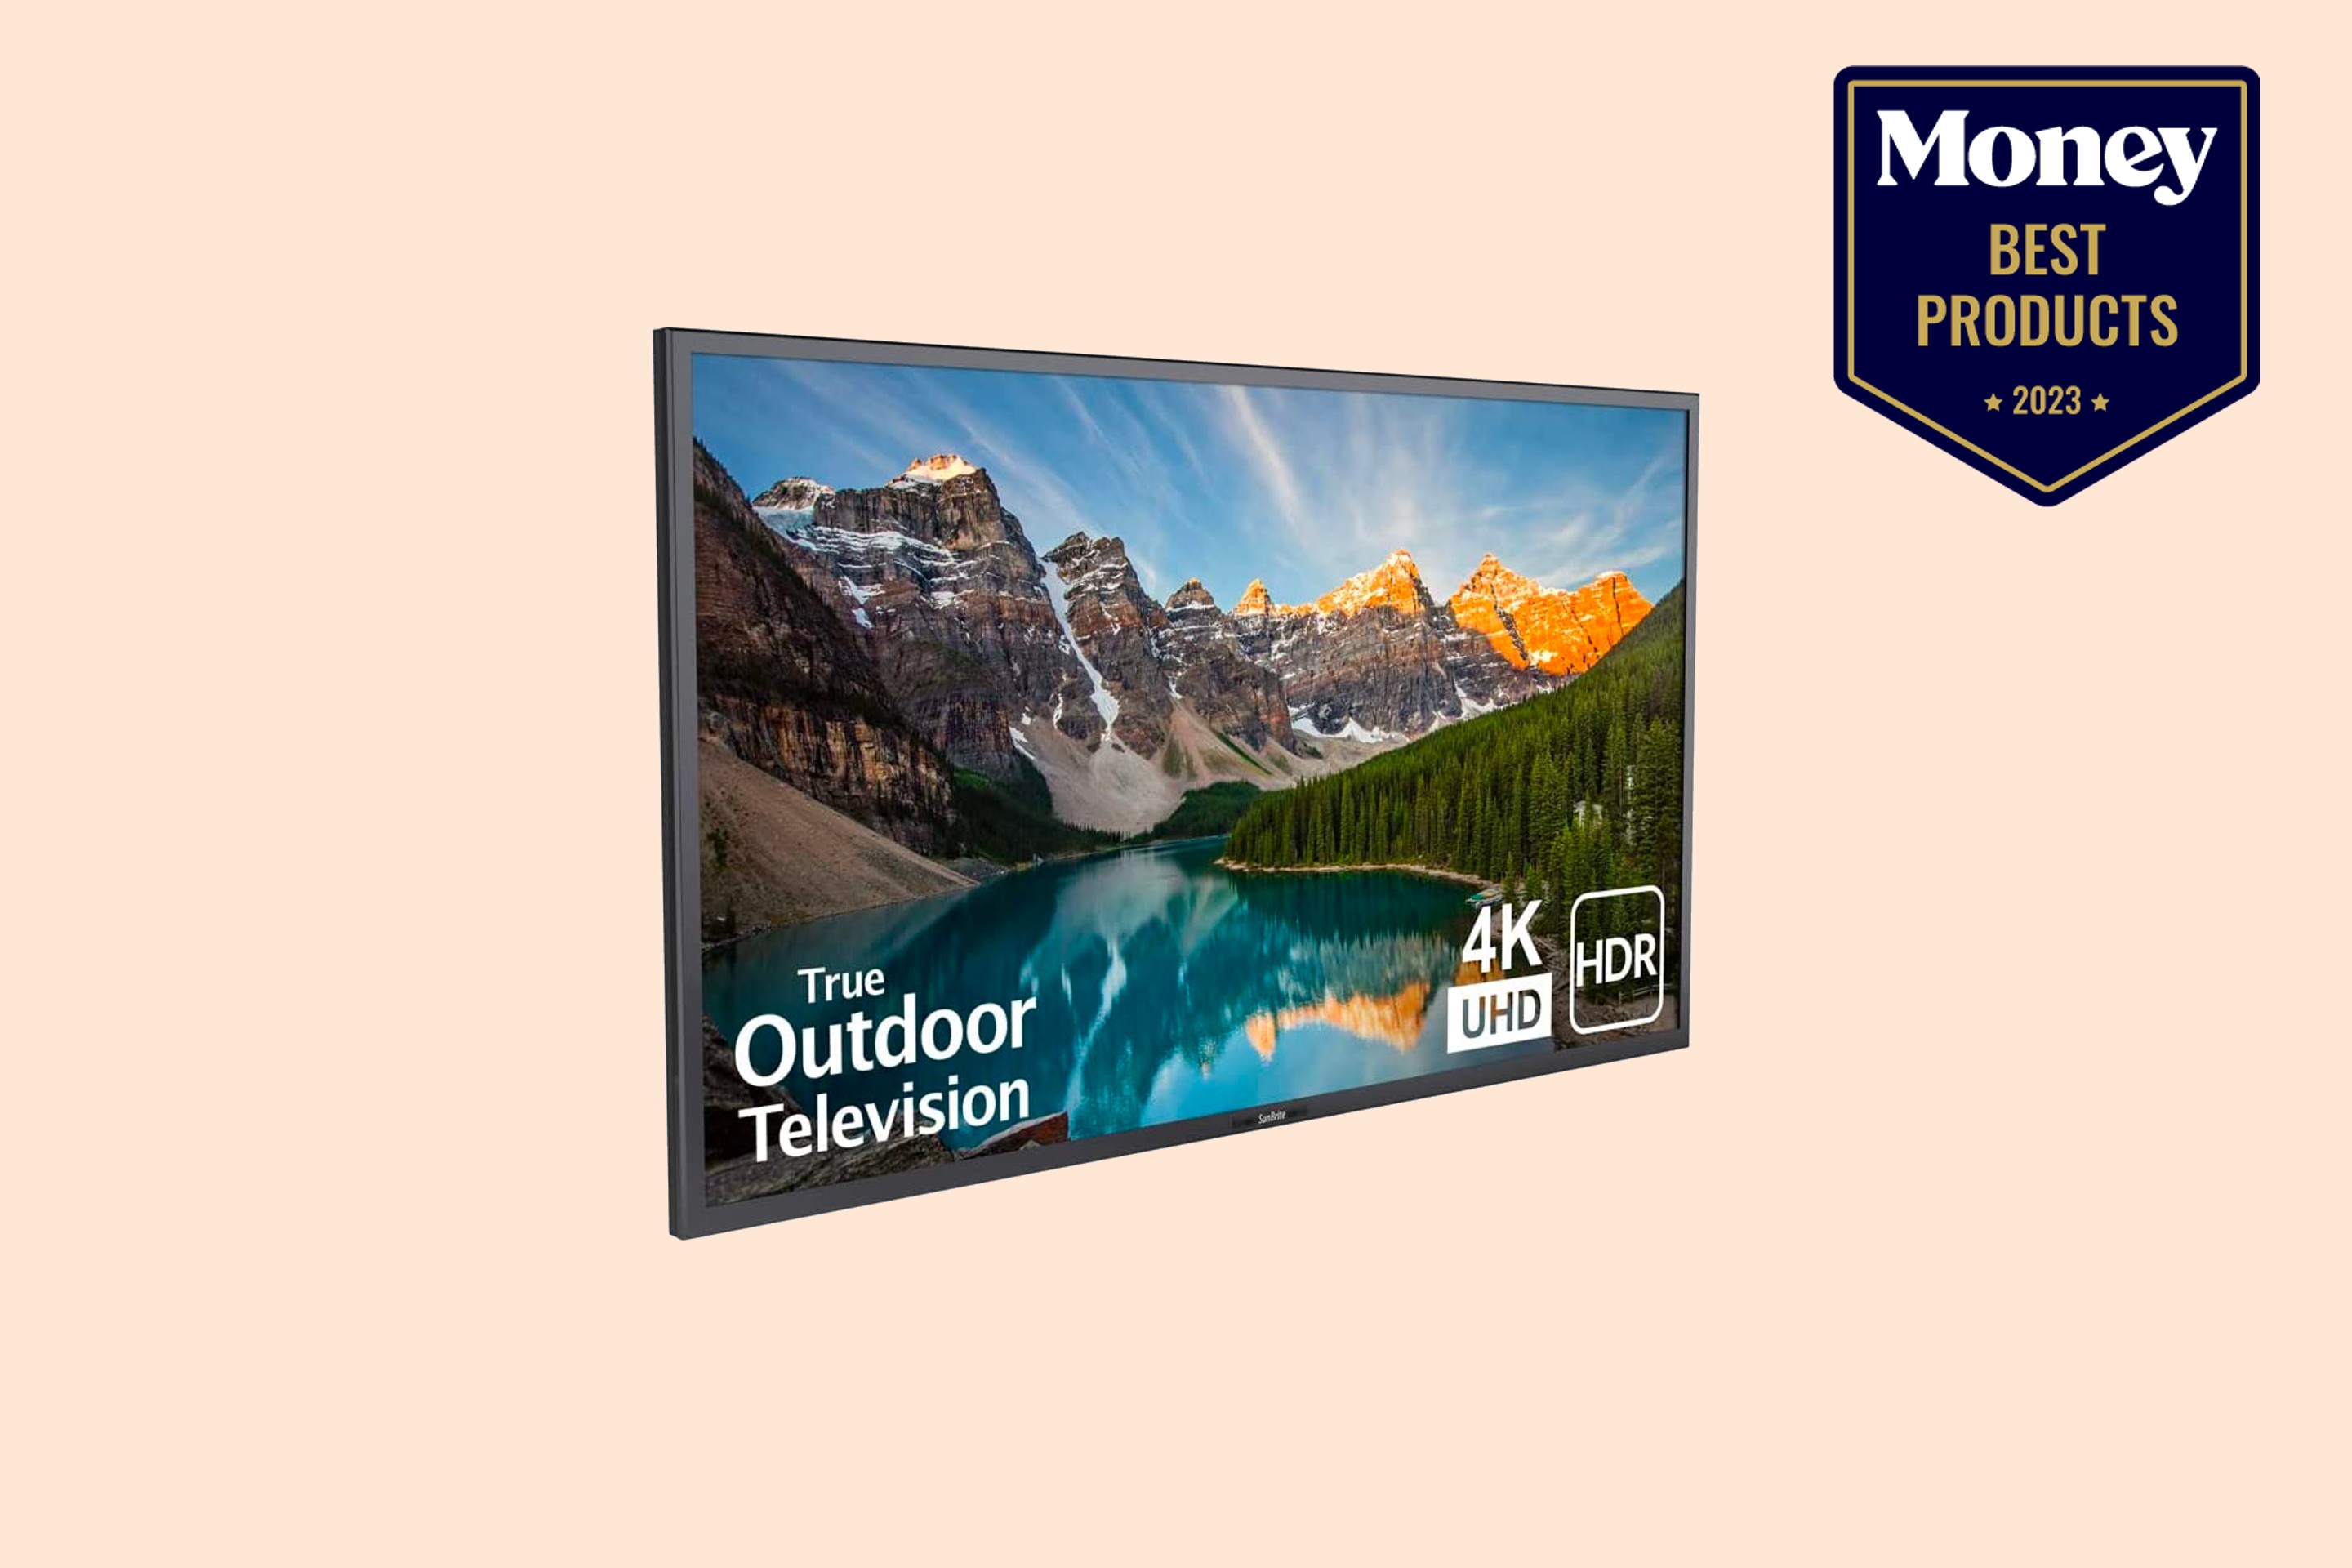 The Best Outdoor TVs for Your Money